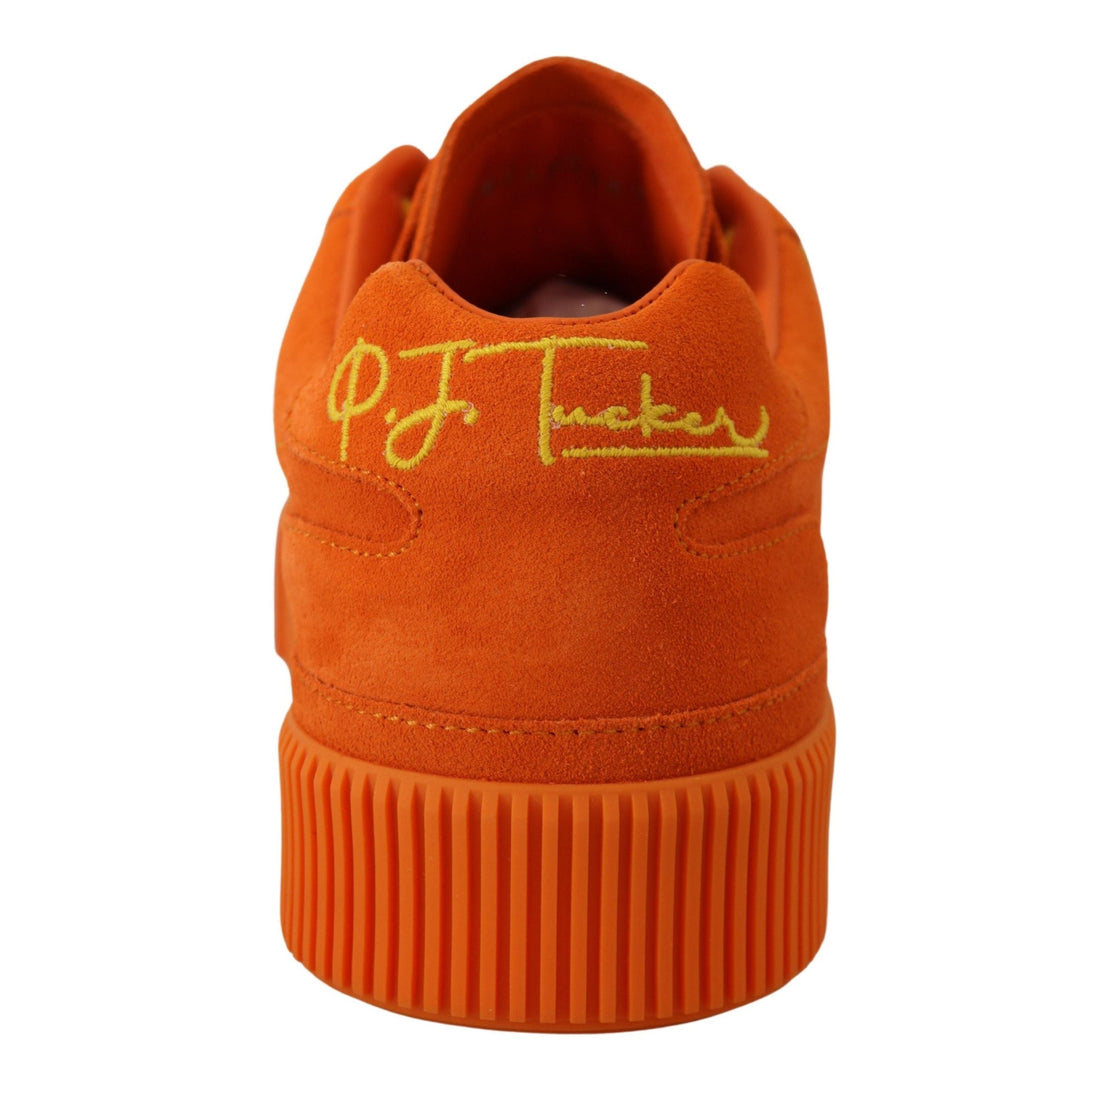 Dolce & Gabbana Orange Leather P.j. Tucker Sneakers Shoes